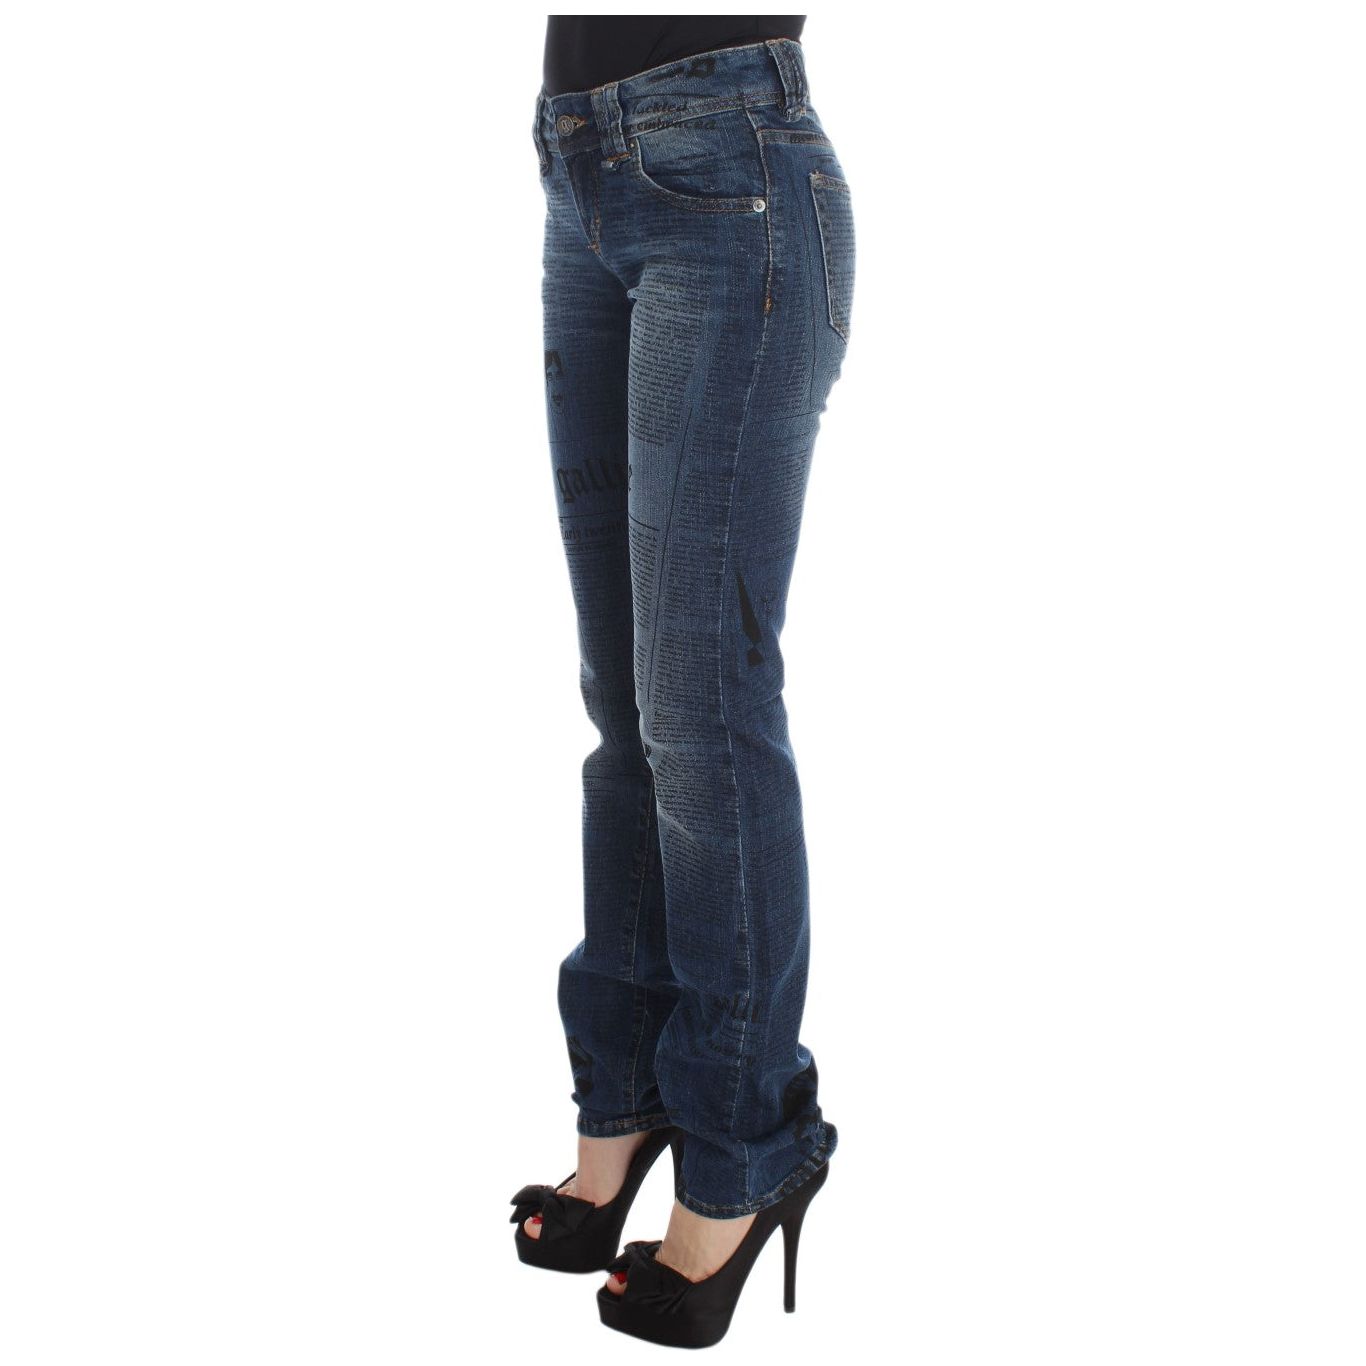 John Galliano Elegant Slim Bootcut Denim Jeans blue-wash-cotton-blend-slim-fit-bootcut-jeans-1 329940-blue-wash-cotton-blend-slim-fit-bootcut-jeans-3-1.jpg